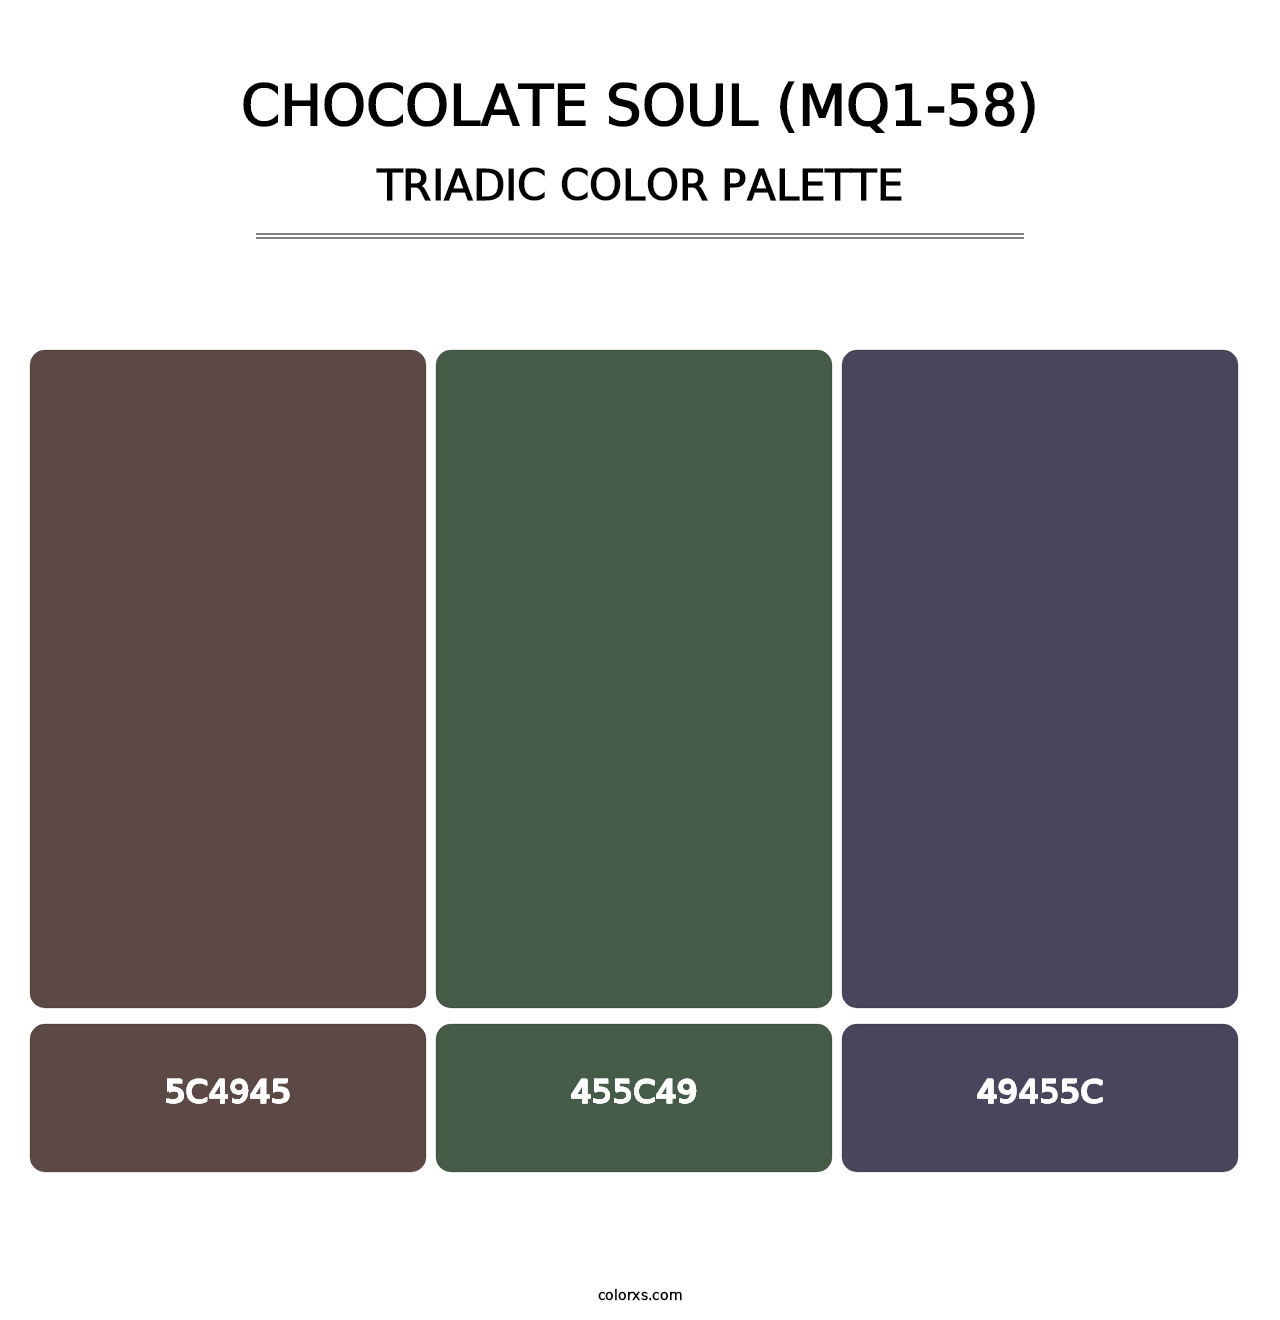 Chocolate Soul (MQ1-58) - Triadic Color Palette